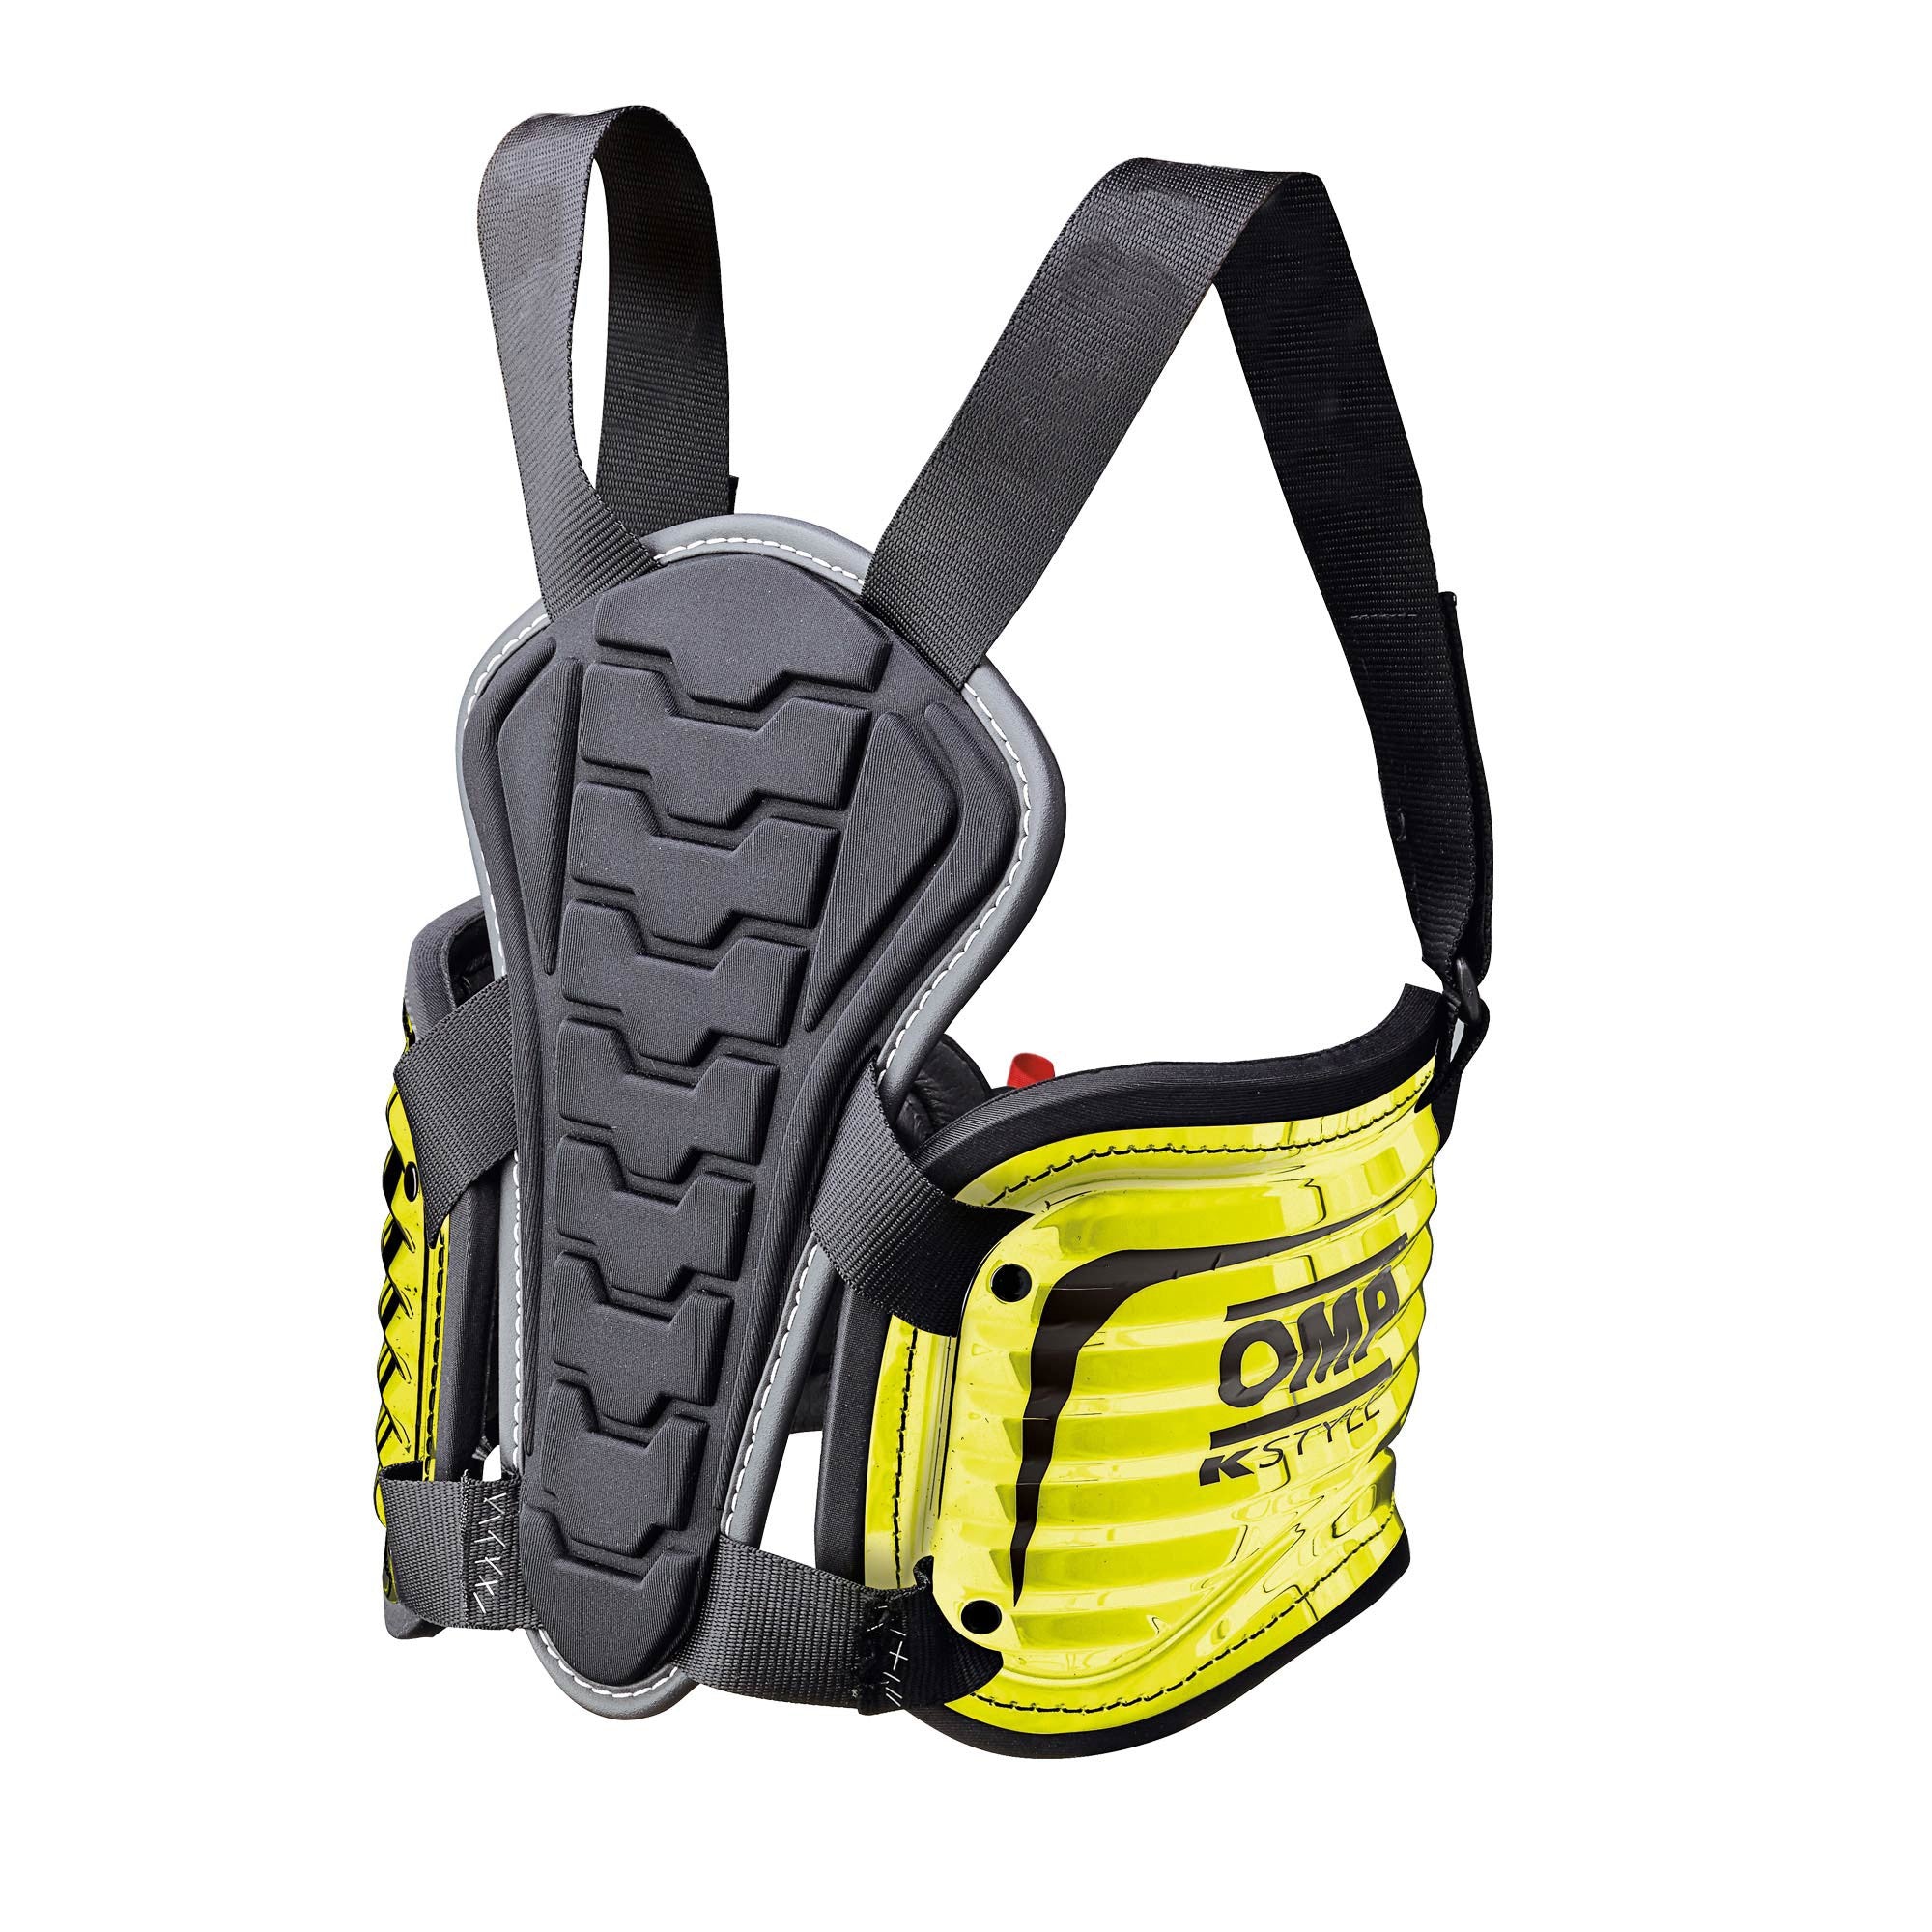 OMP KK0-0048-A01-178-ML (KK048178ML) KS protective vest for karting, neon yellow, size M/L Photo-0 